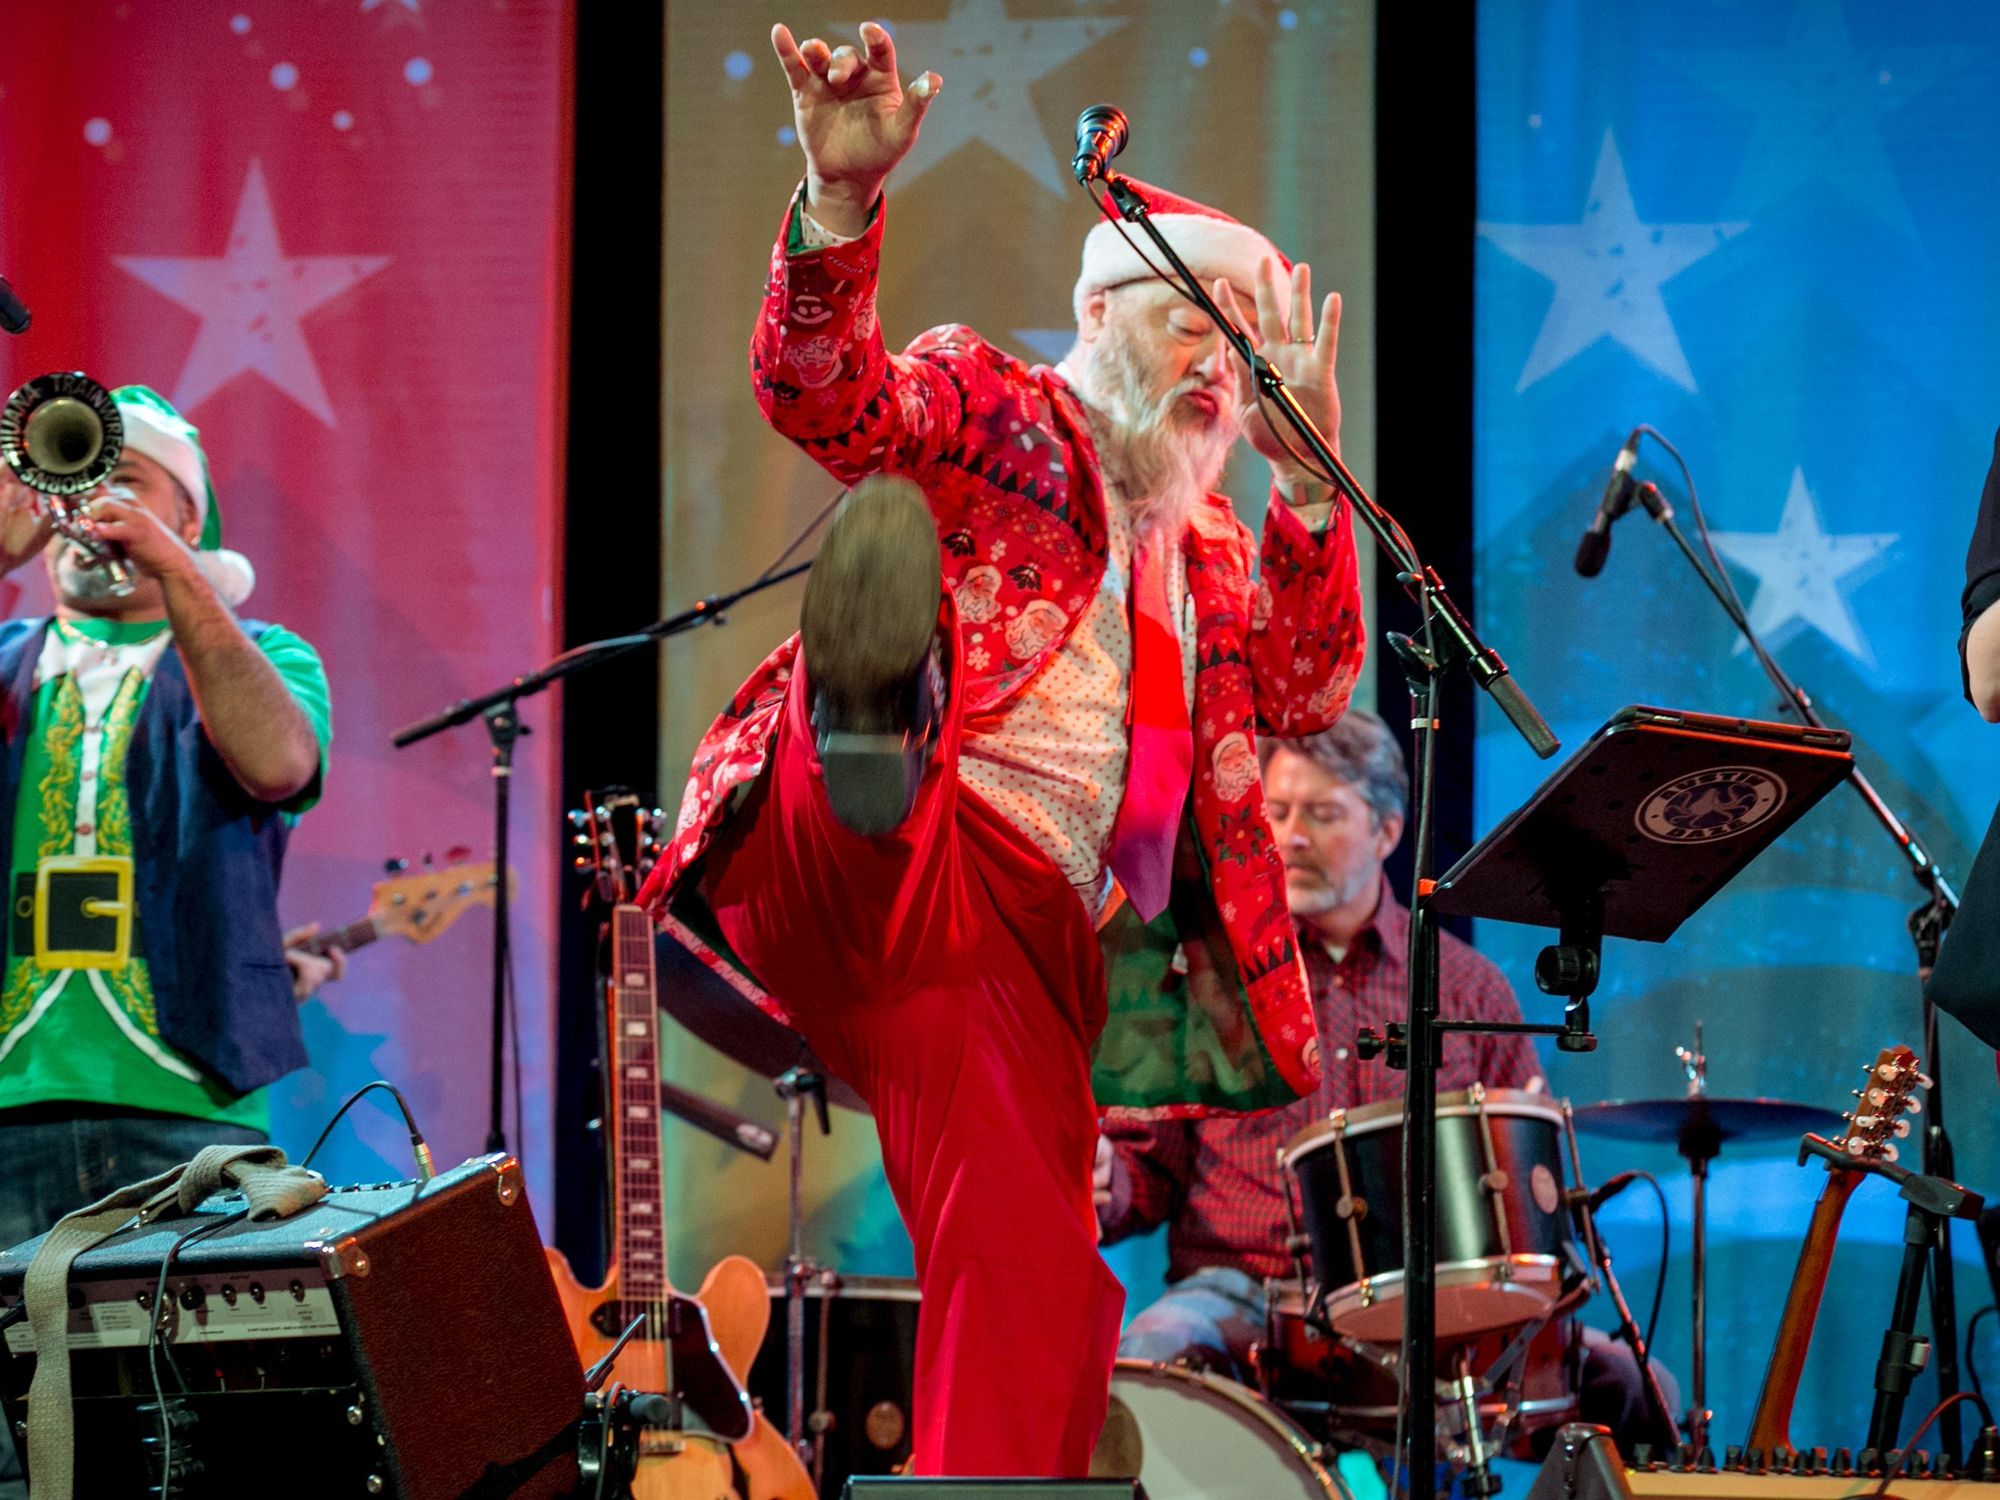 A musician dressed as Santa at the Armadillo Christmas Bazaar in Austin